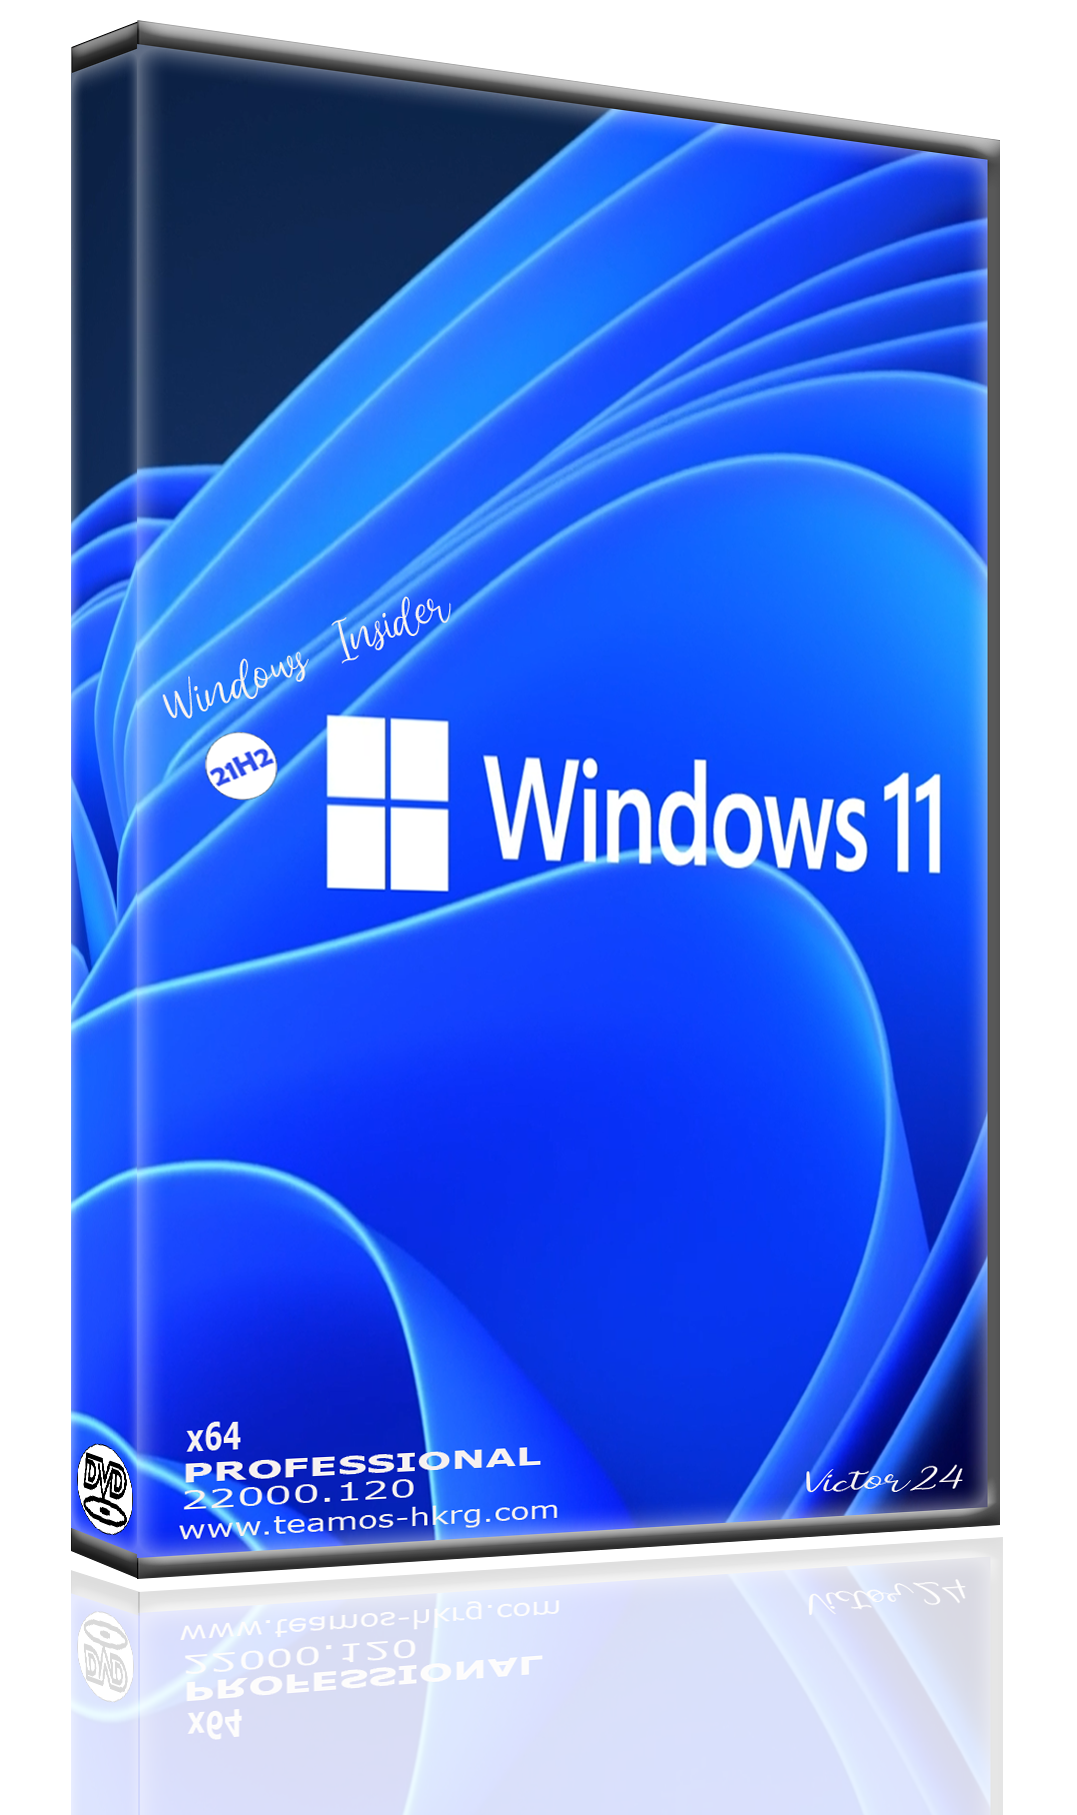 Windows 11 Wallpaper Png 2024 - Win 11 Home Upgrade 2024